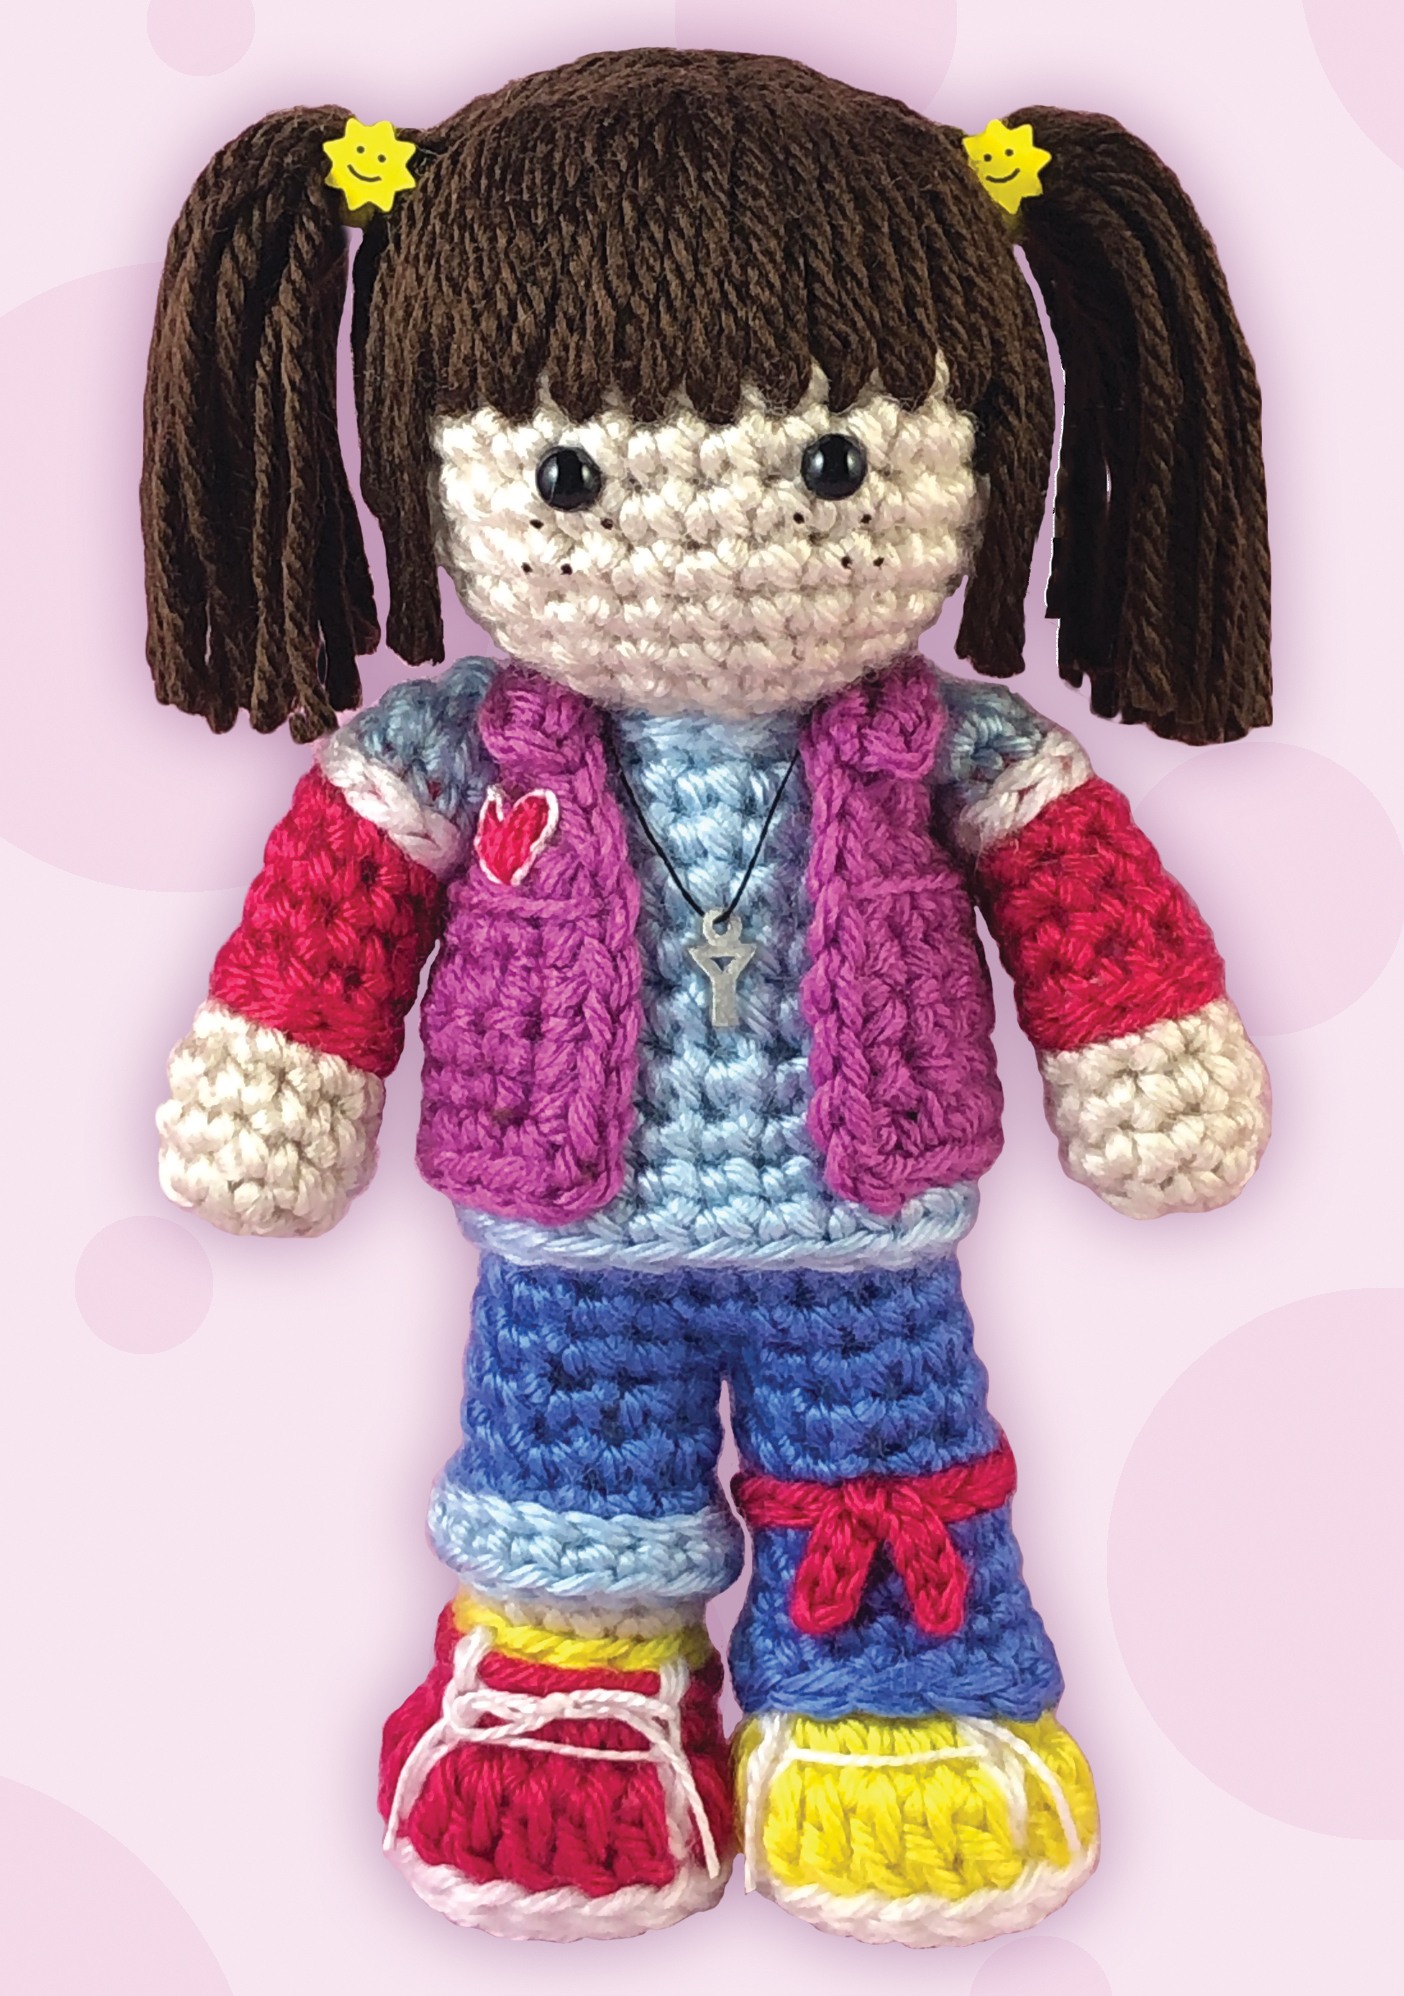 Crocheted doll amigurumi Punky Brewster from Punky Brewster